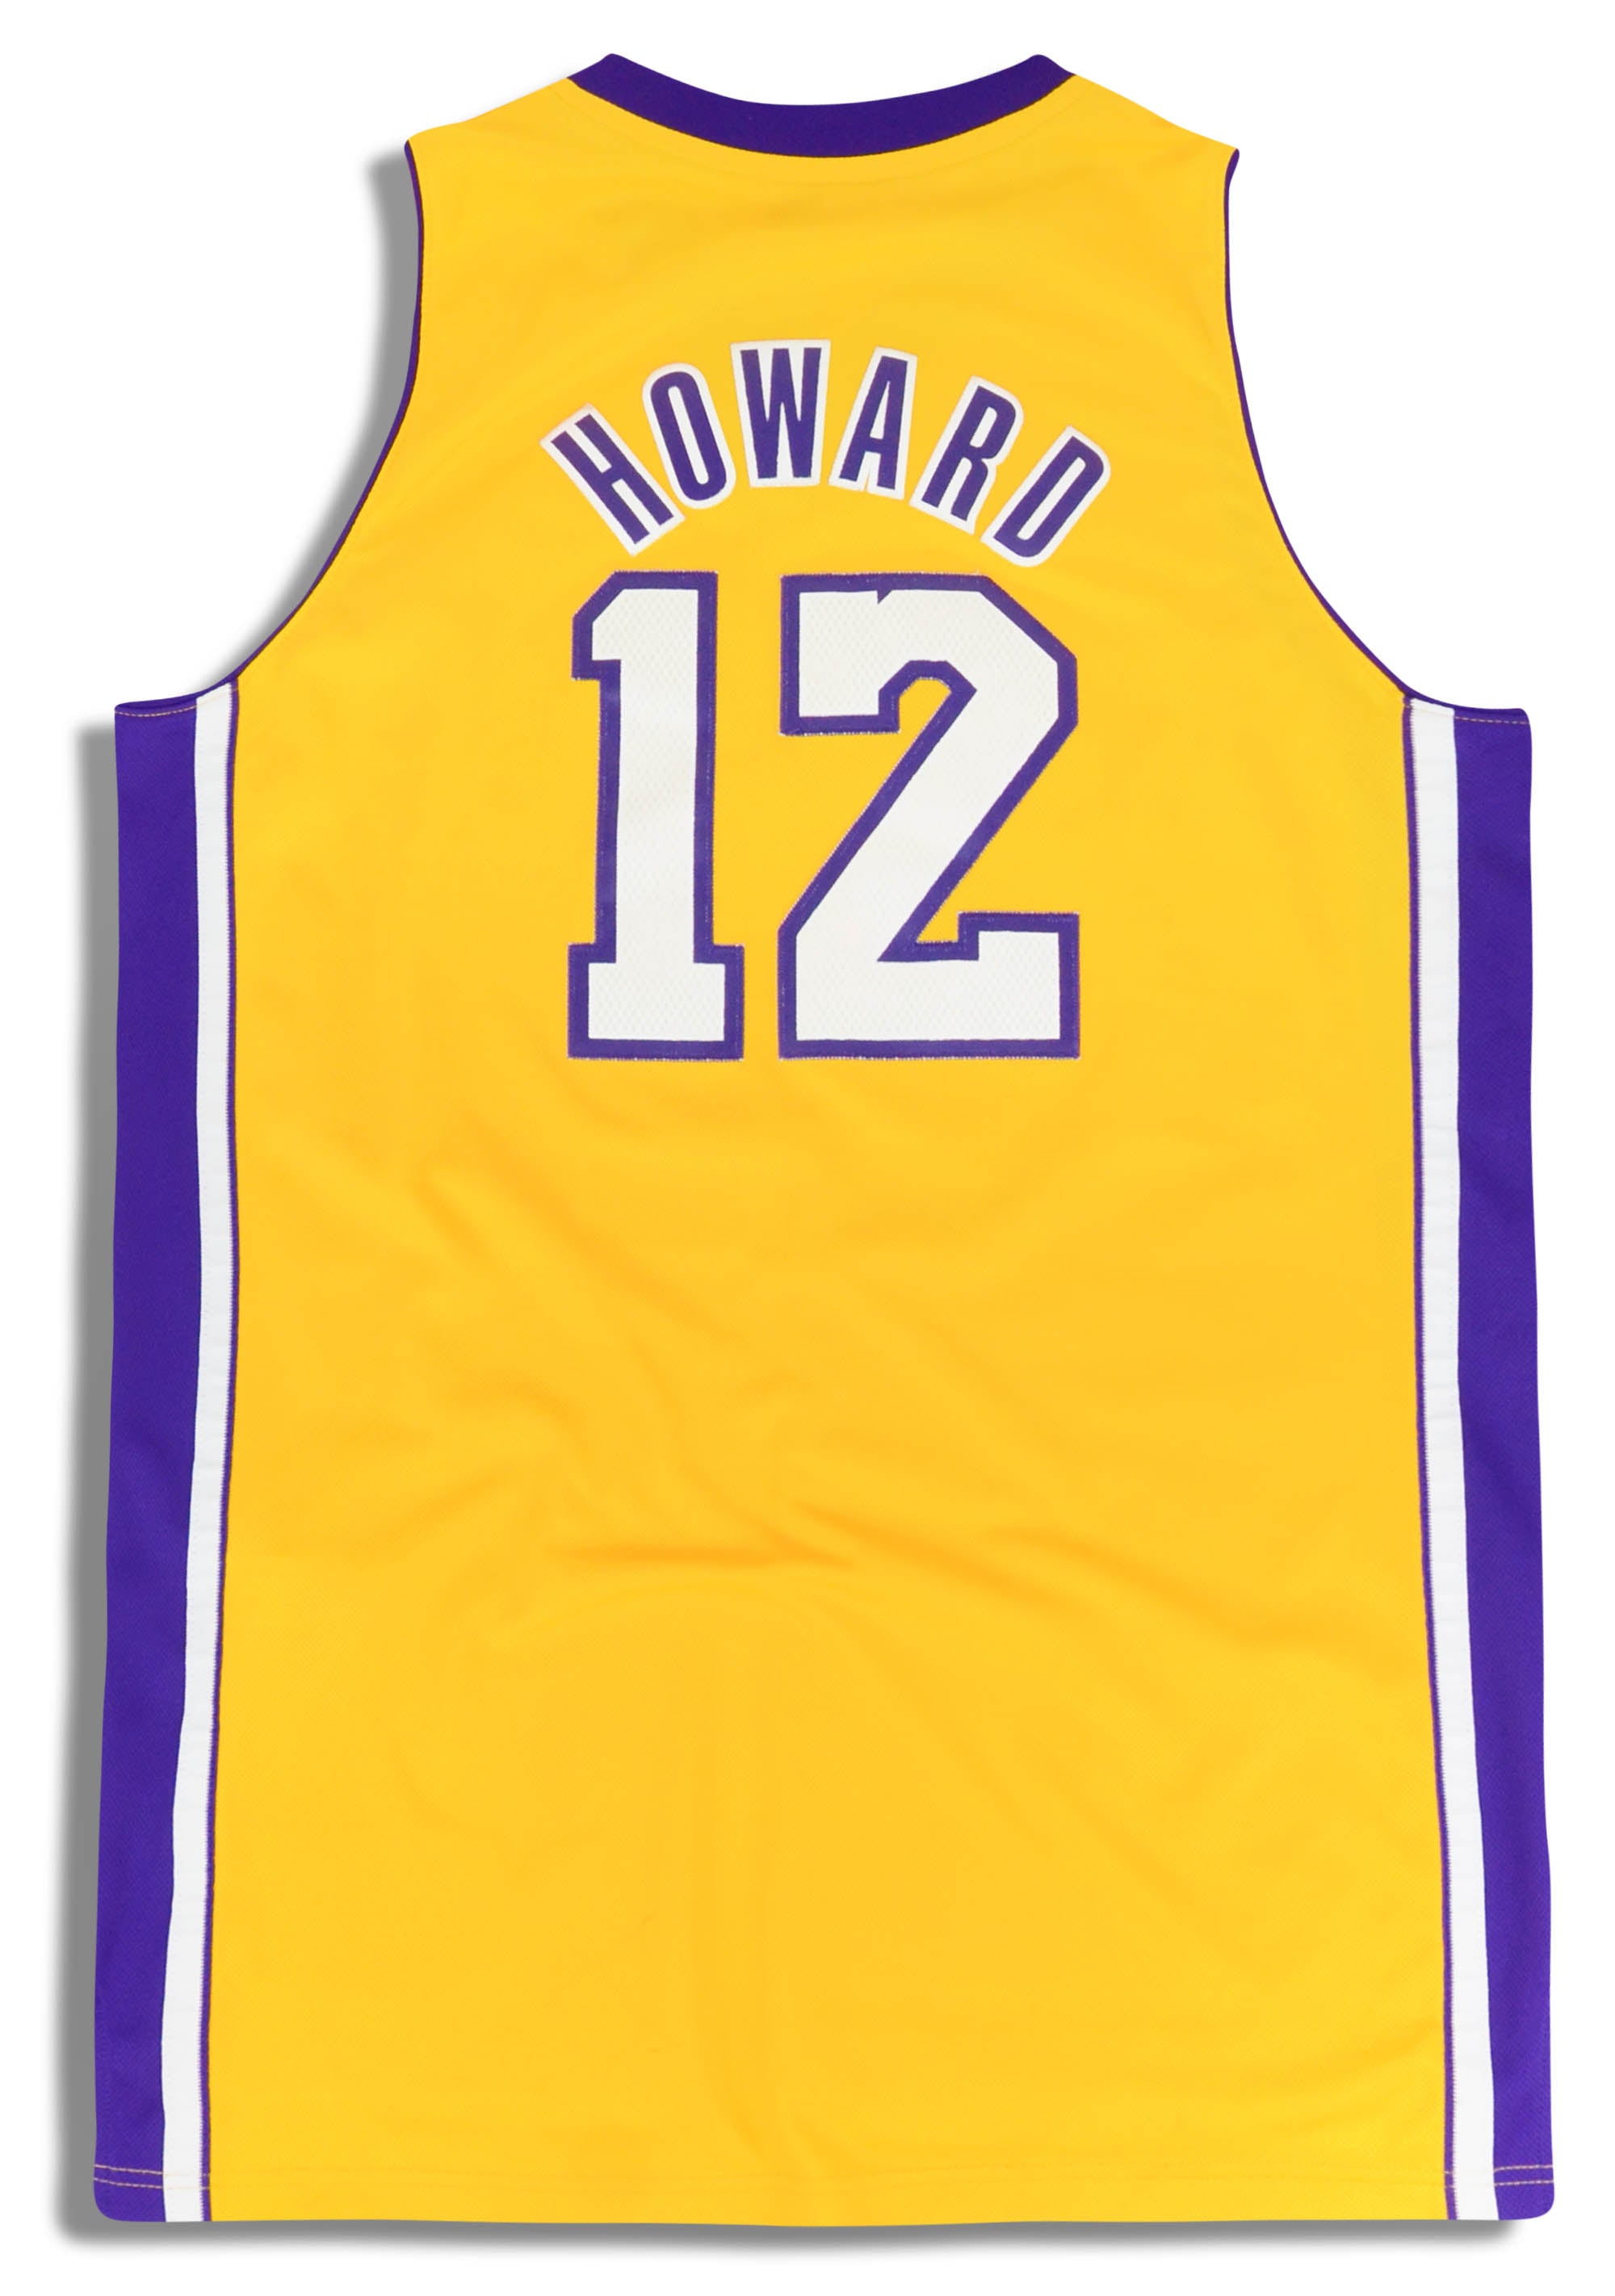 Dwight Howard Jersey Sewn/Stitched Adult Size 54 Orlando Magic NBA FINALS